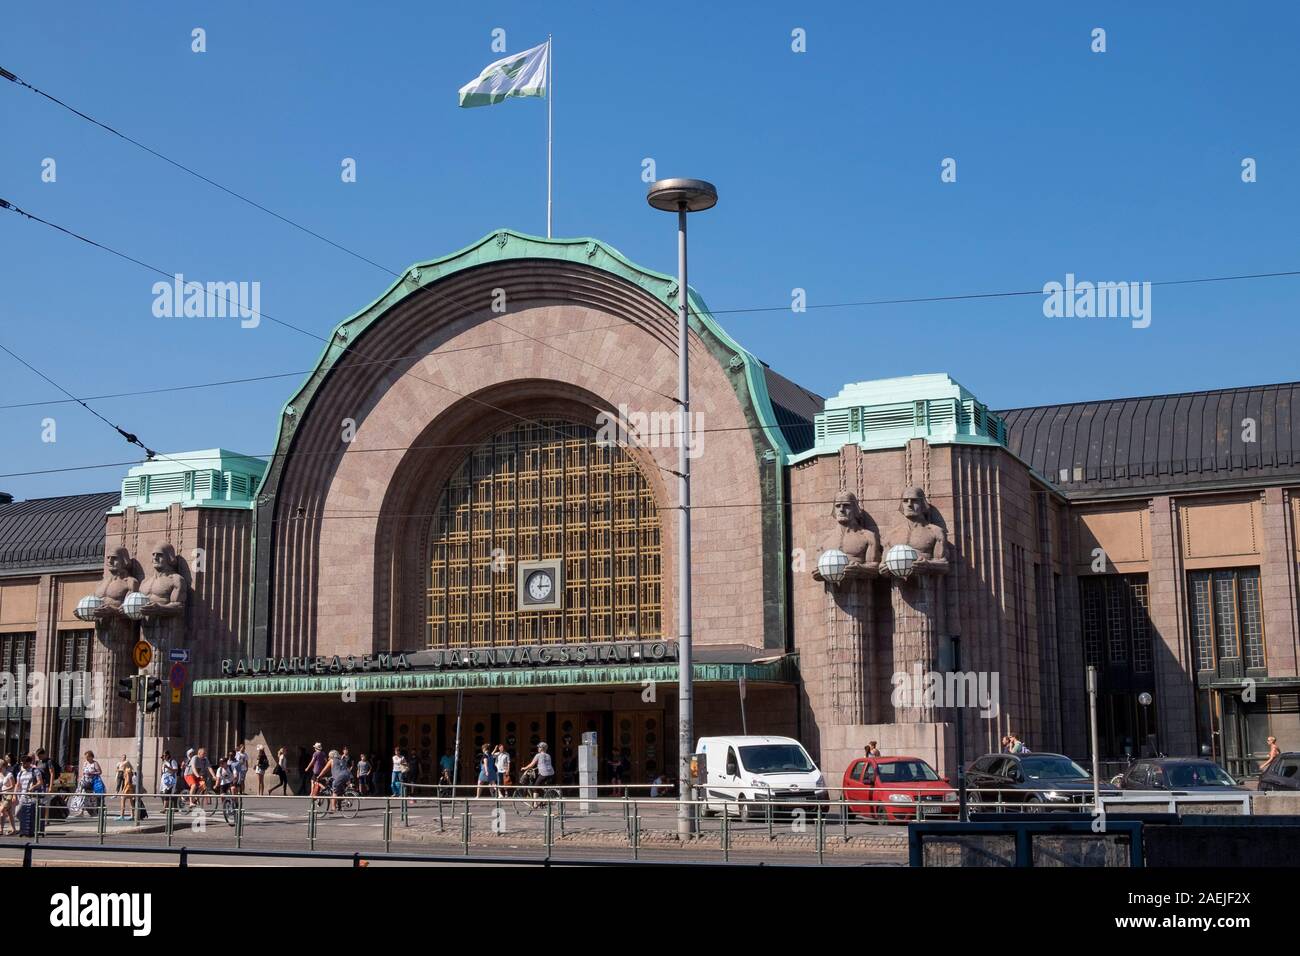 Exterior view of the of Rautatieasema railway station in Helsinki, Finland,Scandinavia, Europe Stock Photo